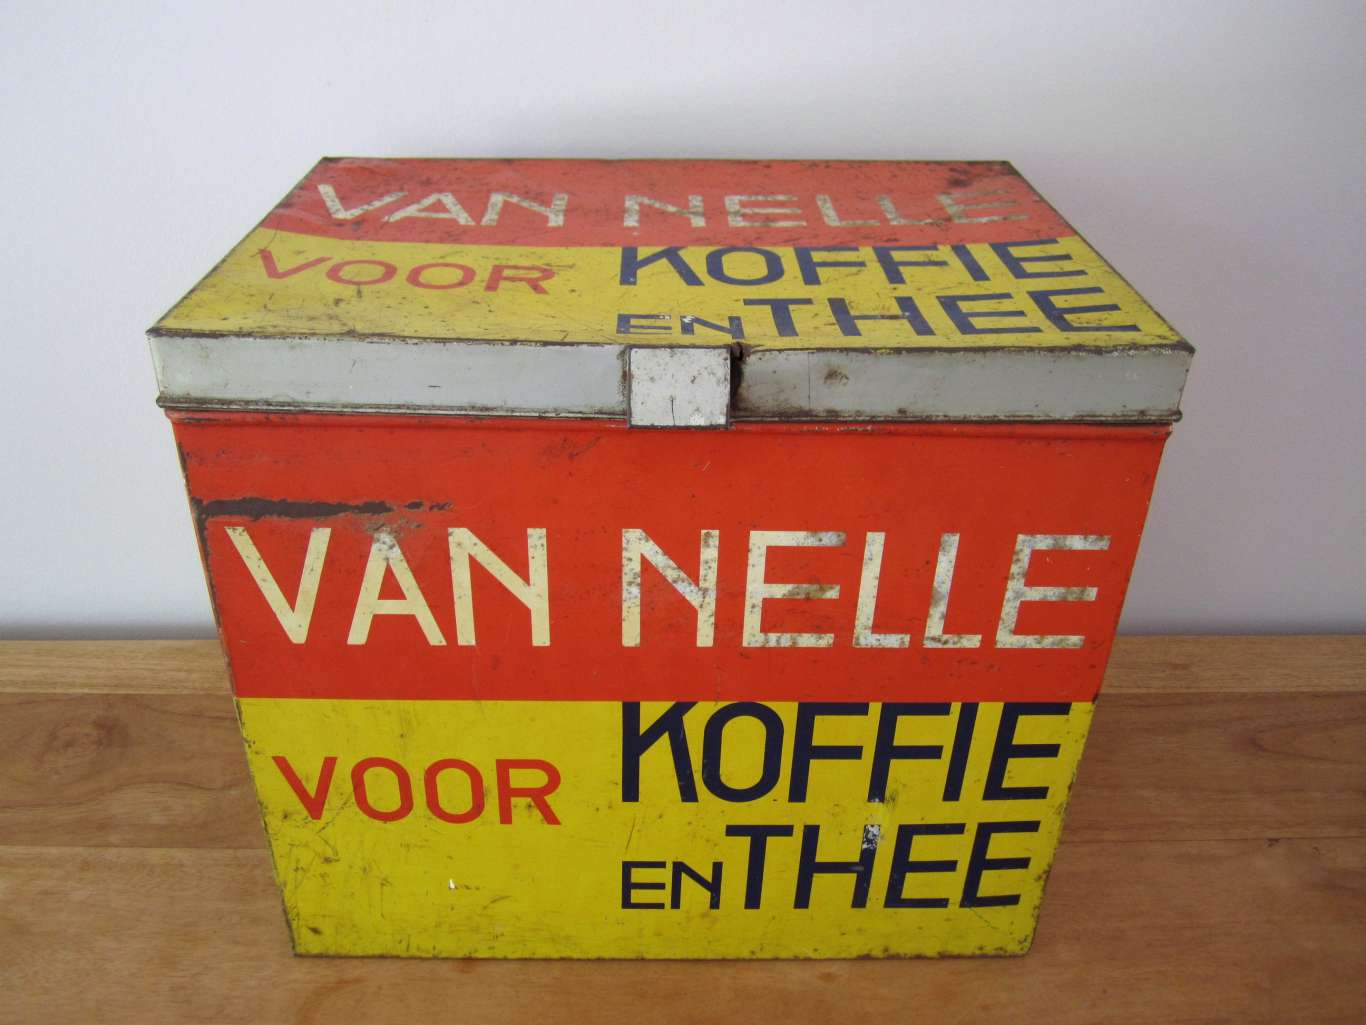 Gebruikt koffieblik het bekende koffiemerk Van Nelle